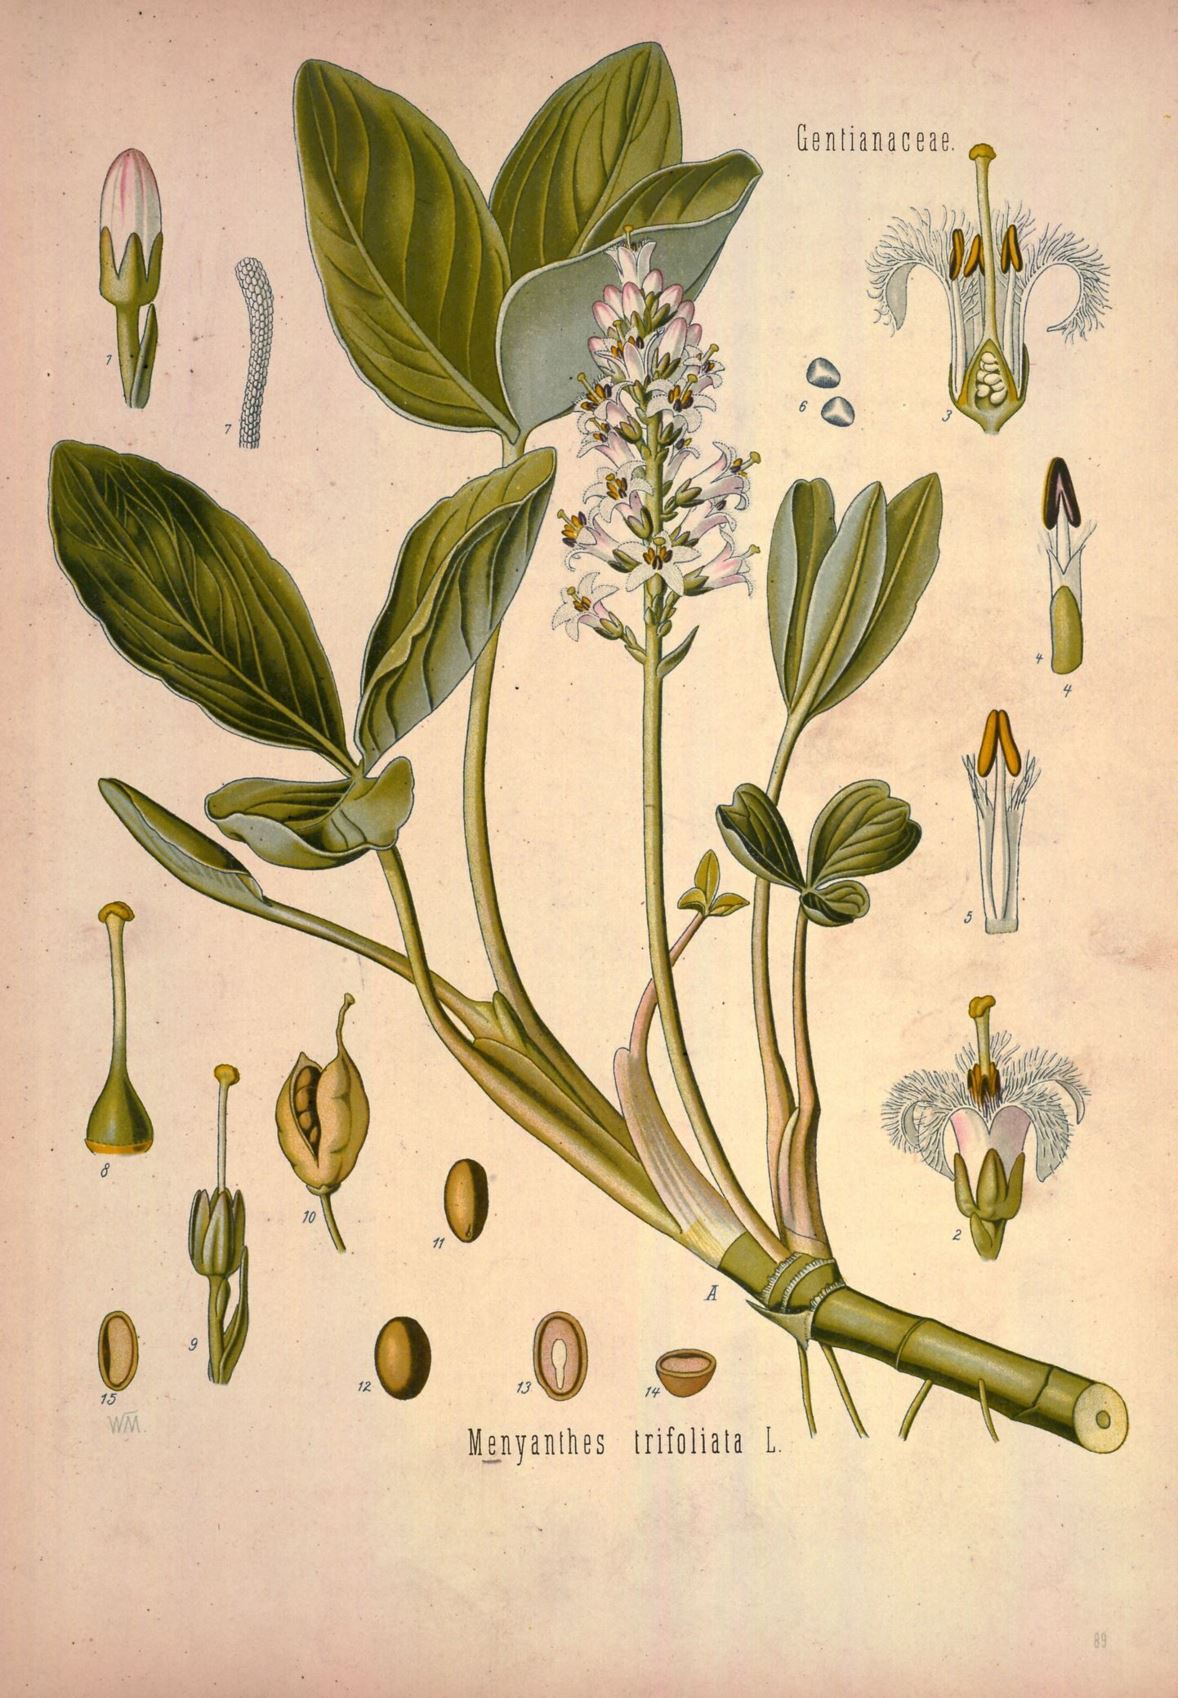 Menyanthes trifoliata - Waterdrieblad, Bog bean, Buck bean, Marsh trefoil